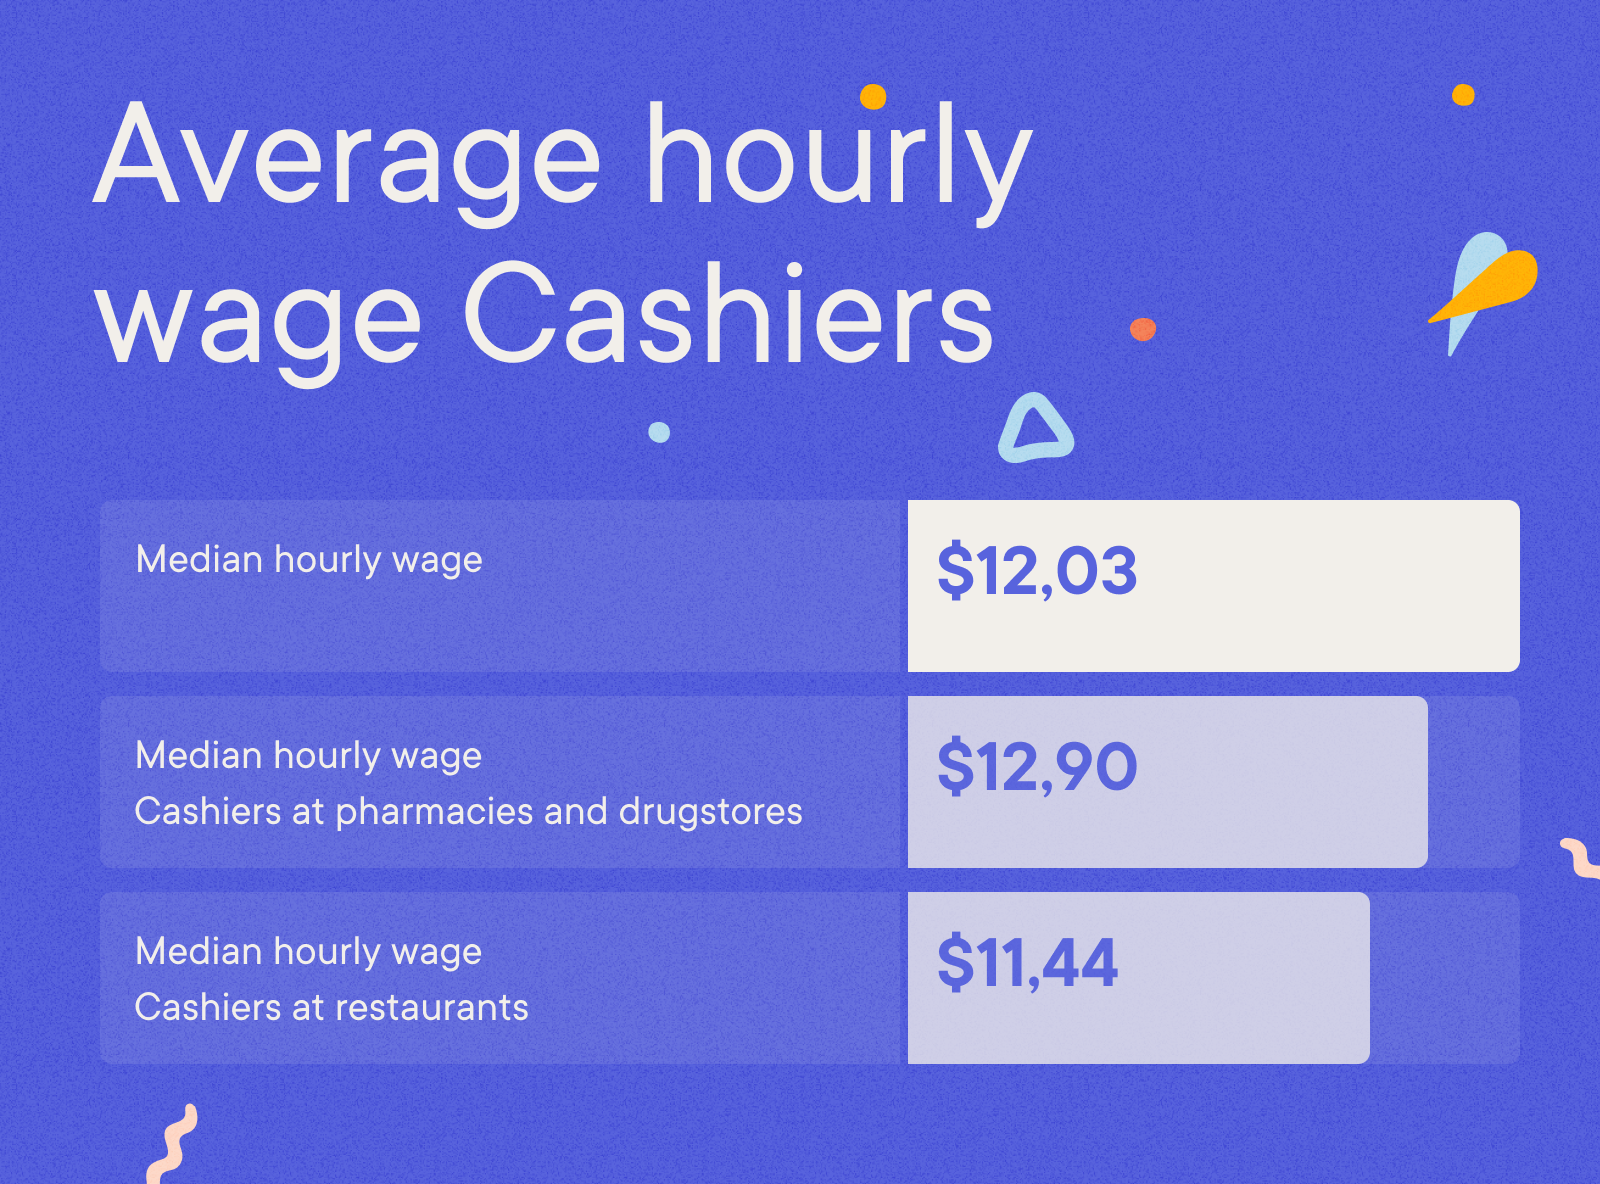 Cashier Resume Example - Average hourly wage Cashiers